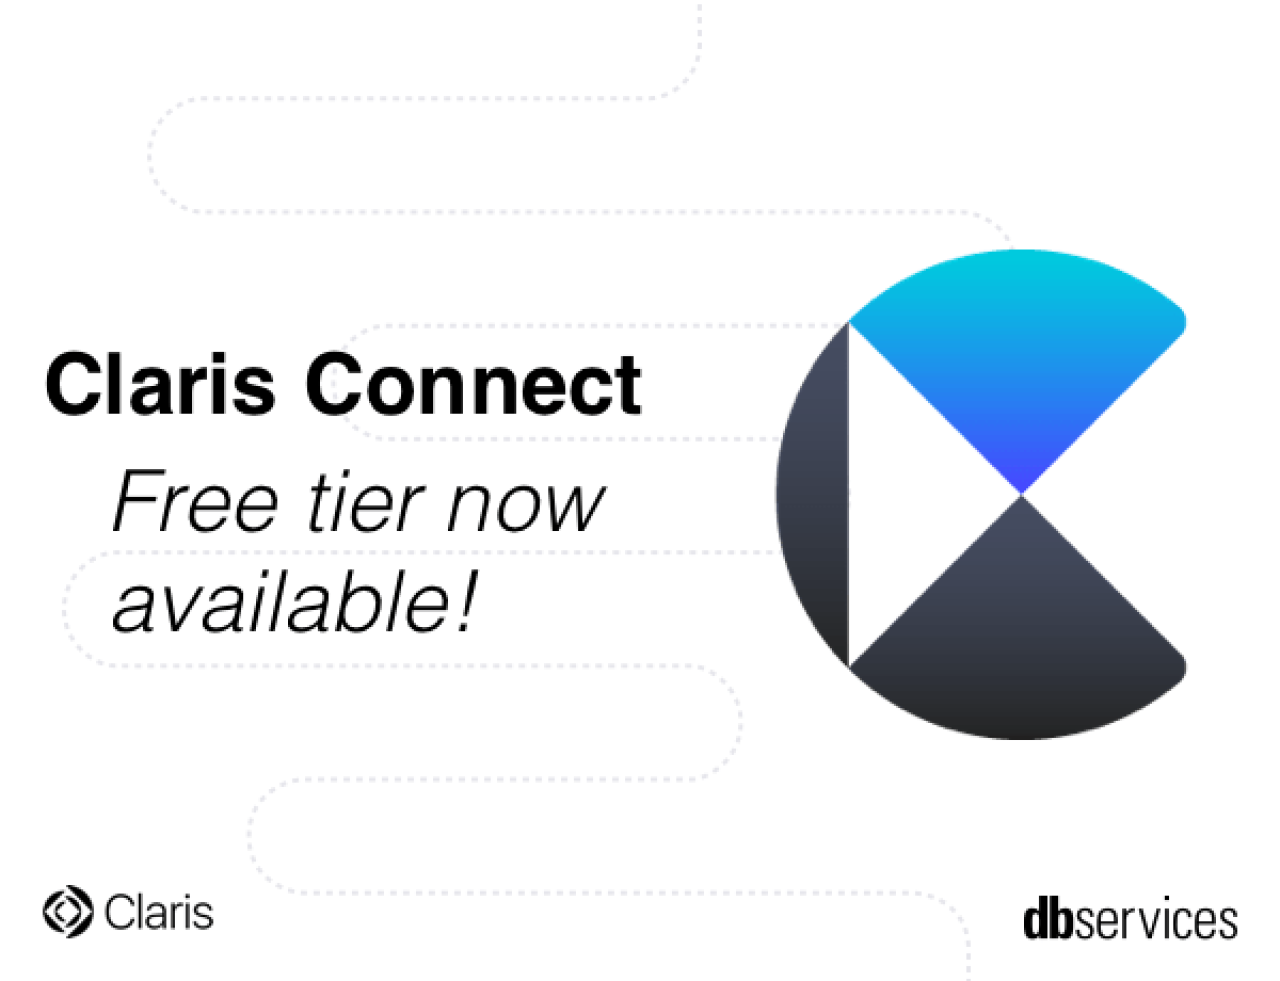 claris connect free tier.